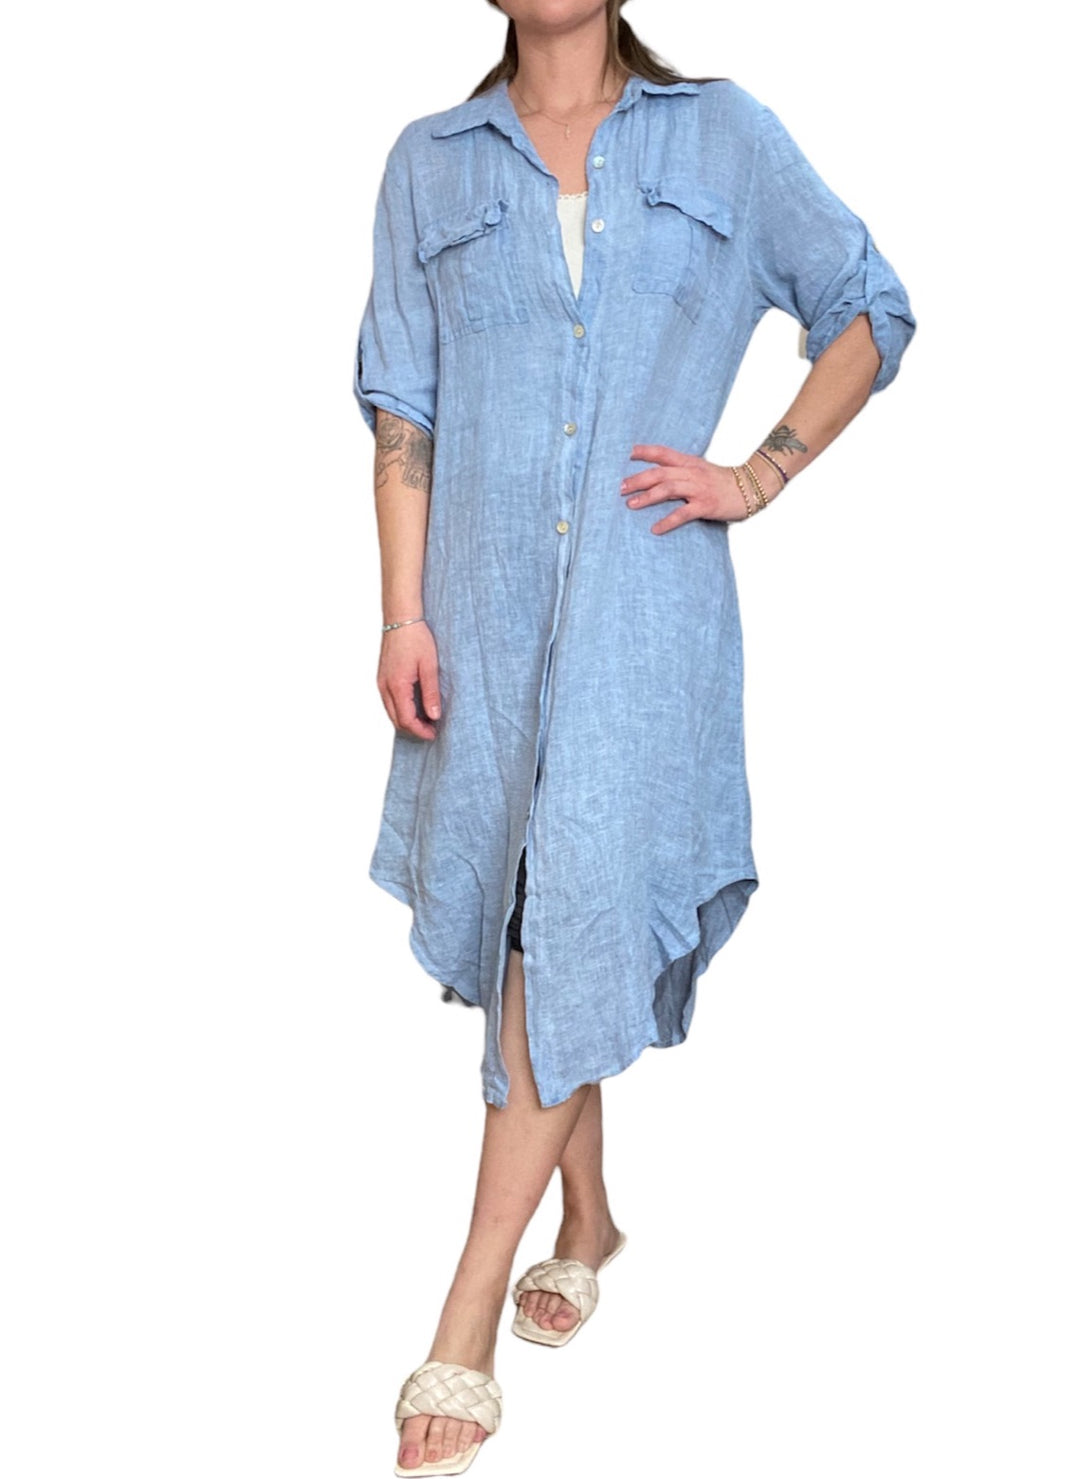 LINEN BUTTON DOWN SHIRT DRESS - Kingfisher Road - Online Boutique